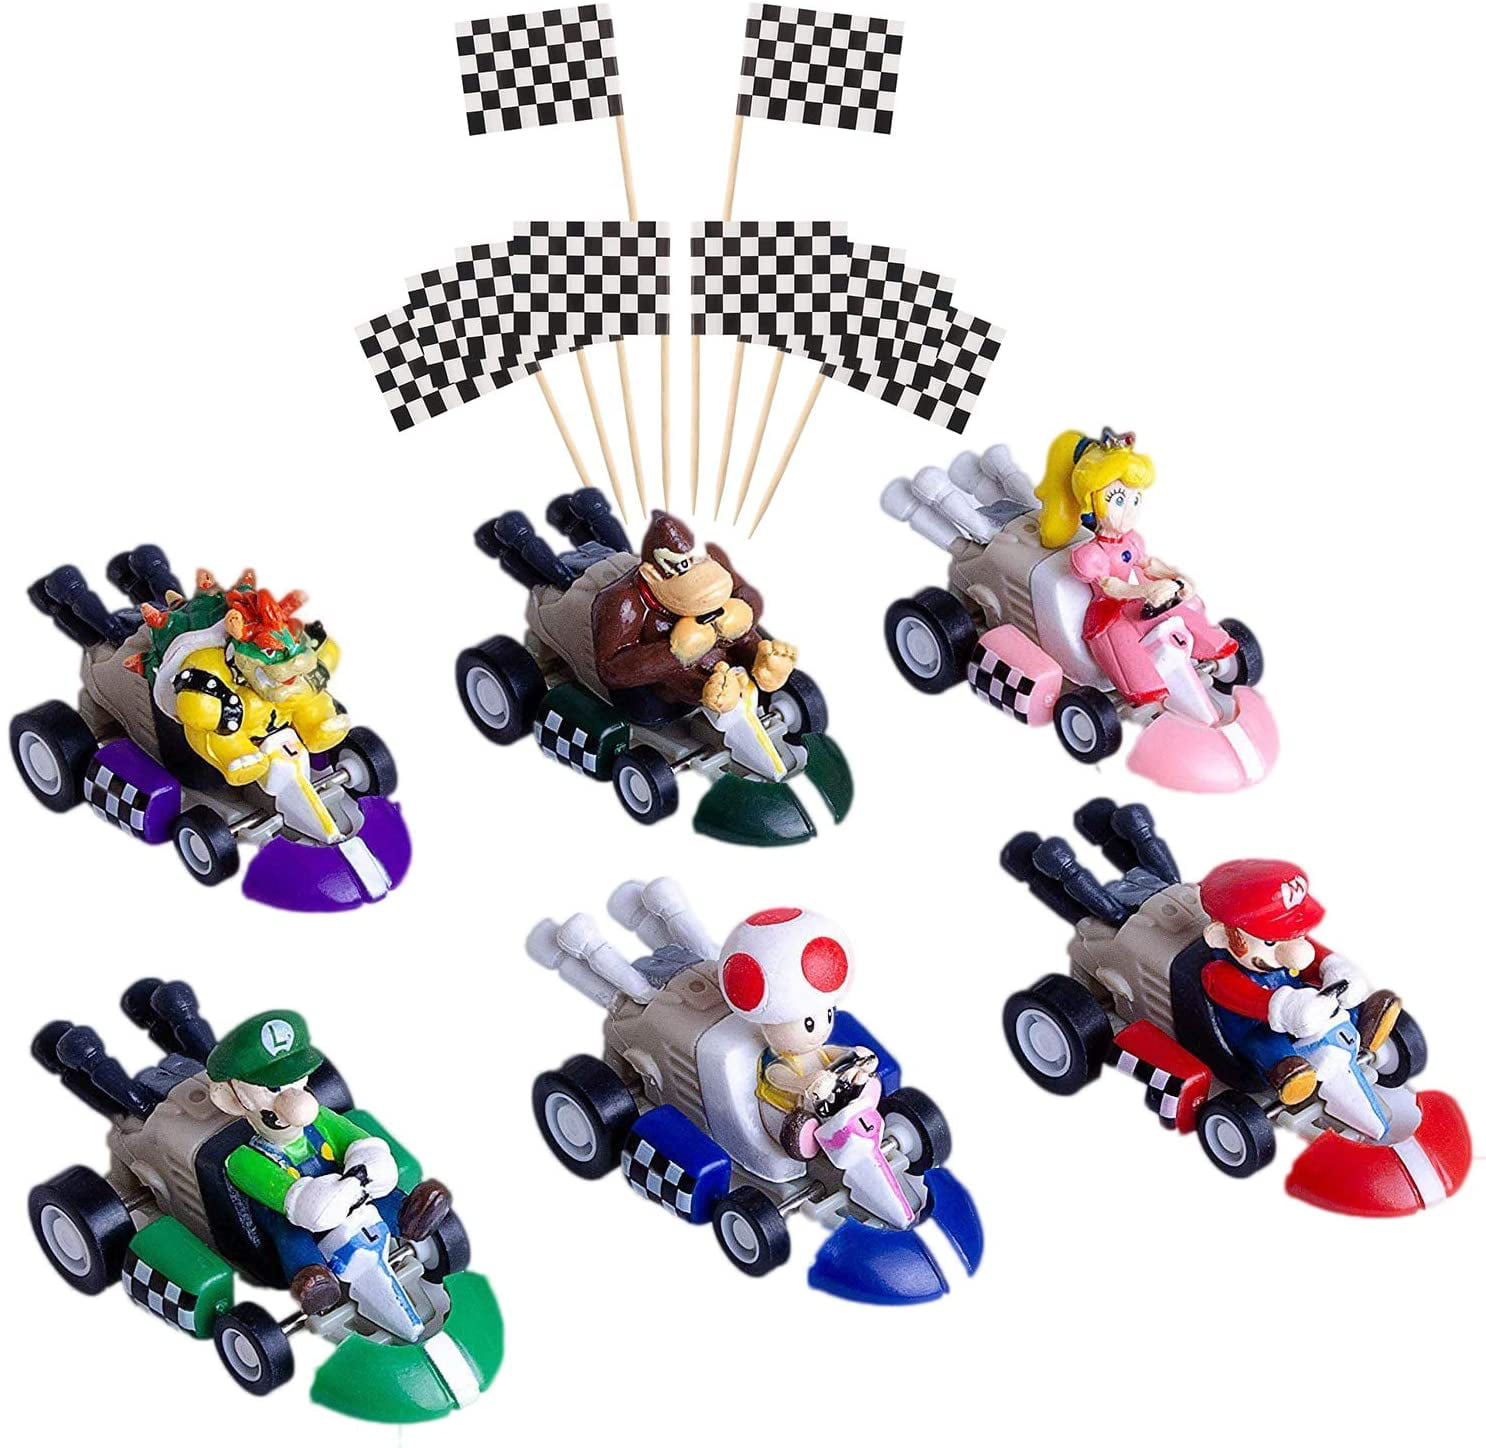 IAMPOK 8 Pcs Mario Kart Pull Back Cars Cake Topper Figures Toy Set-Kids Birthday Party Cake Decoration Supplies